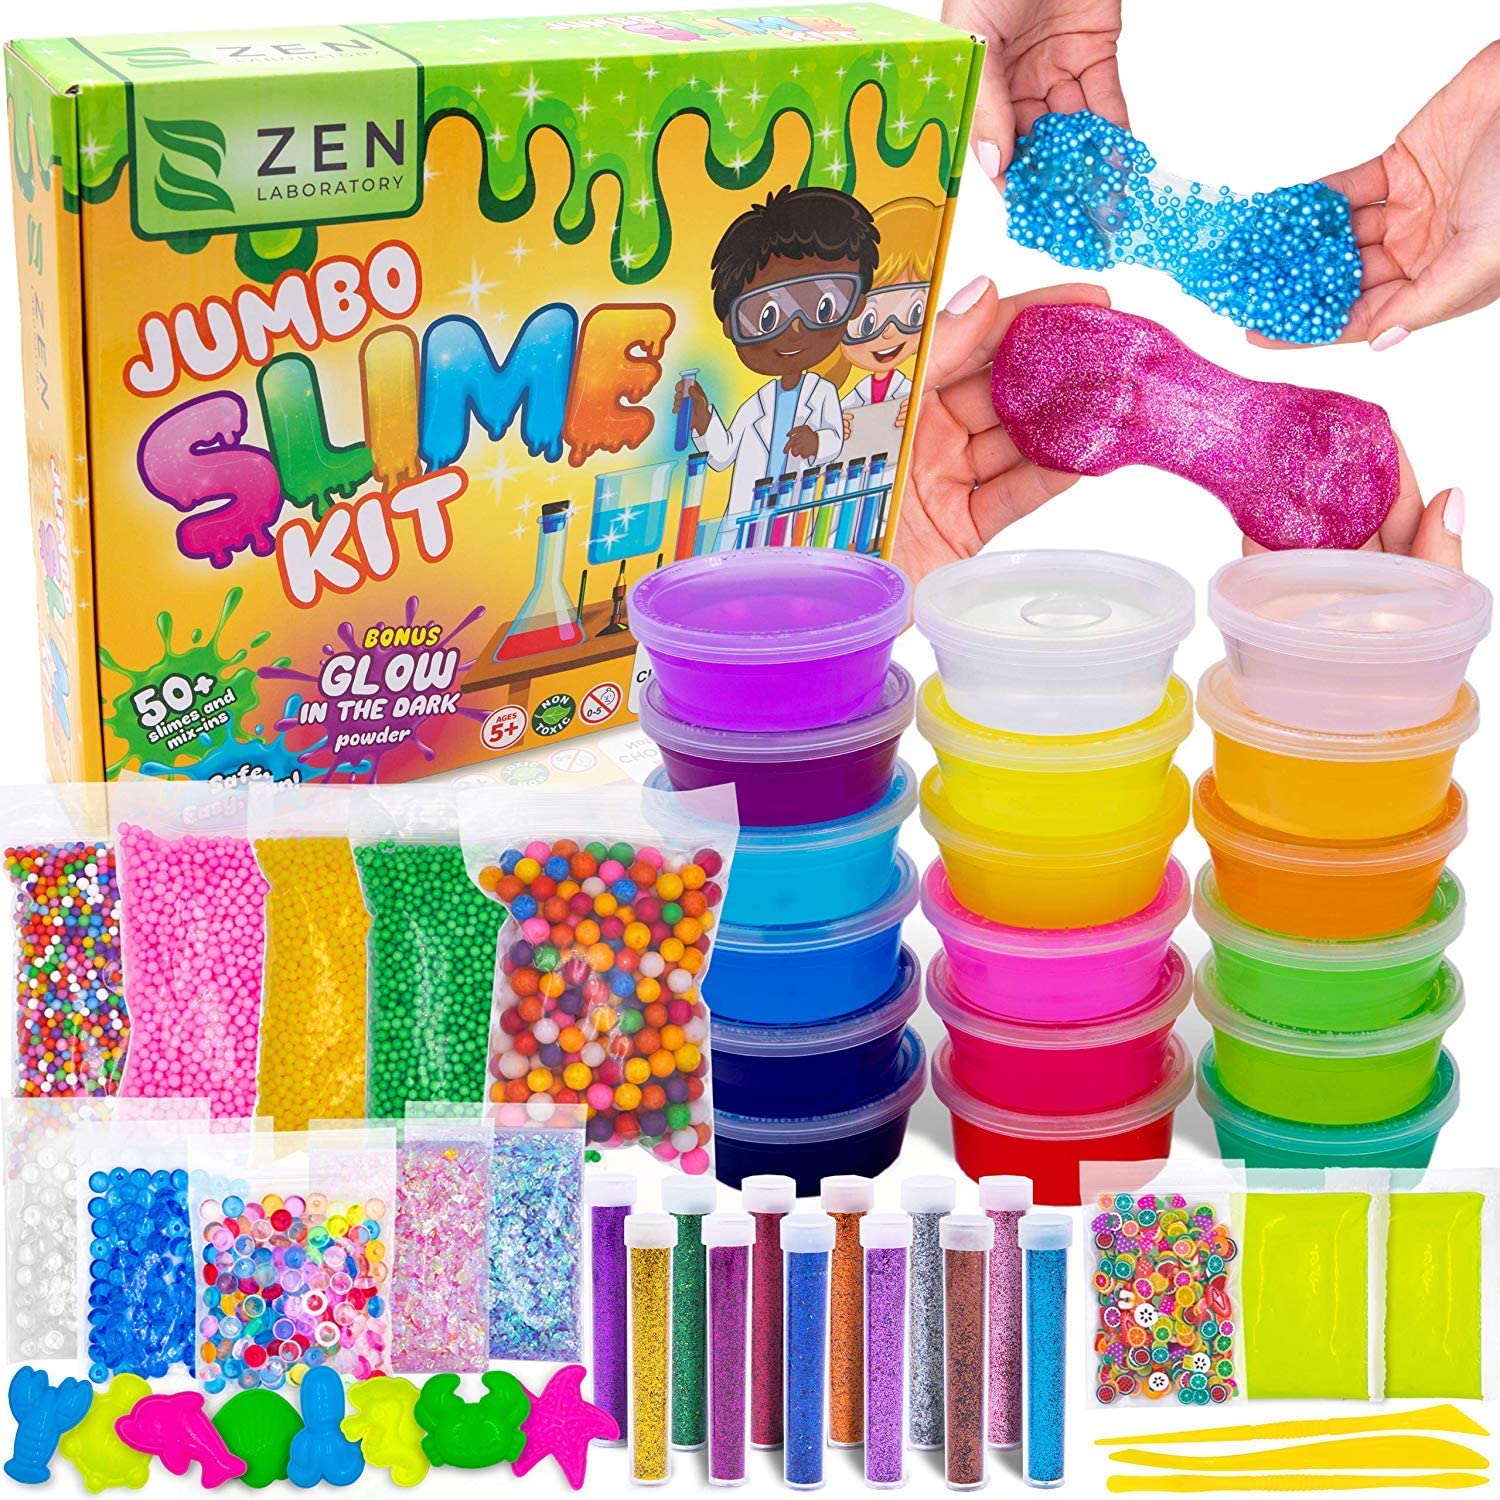 DIY Slime Kit Toy for Kids Girls Boys Ages 5-12, Glow in The Dark Glitter  Slime Making Kit - Slime Supplies w/ Foam Beads Balls, 18 Mystery Box